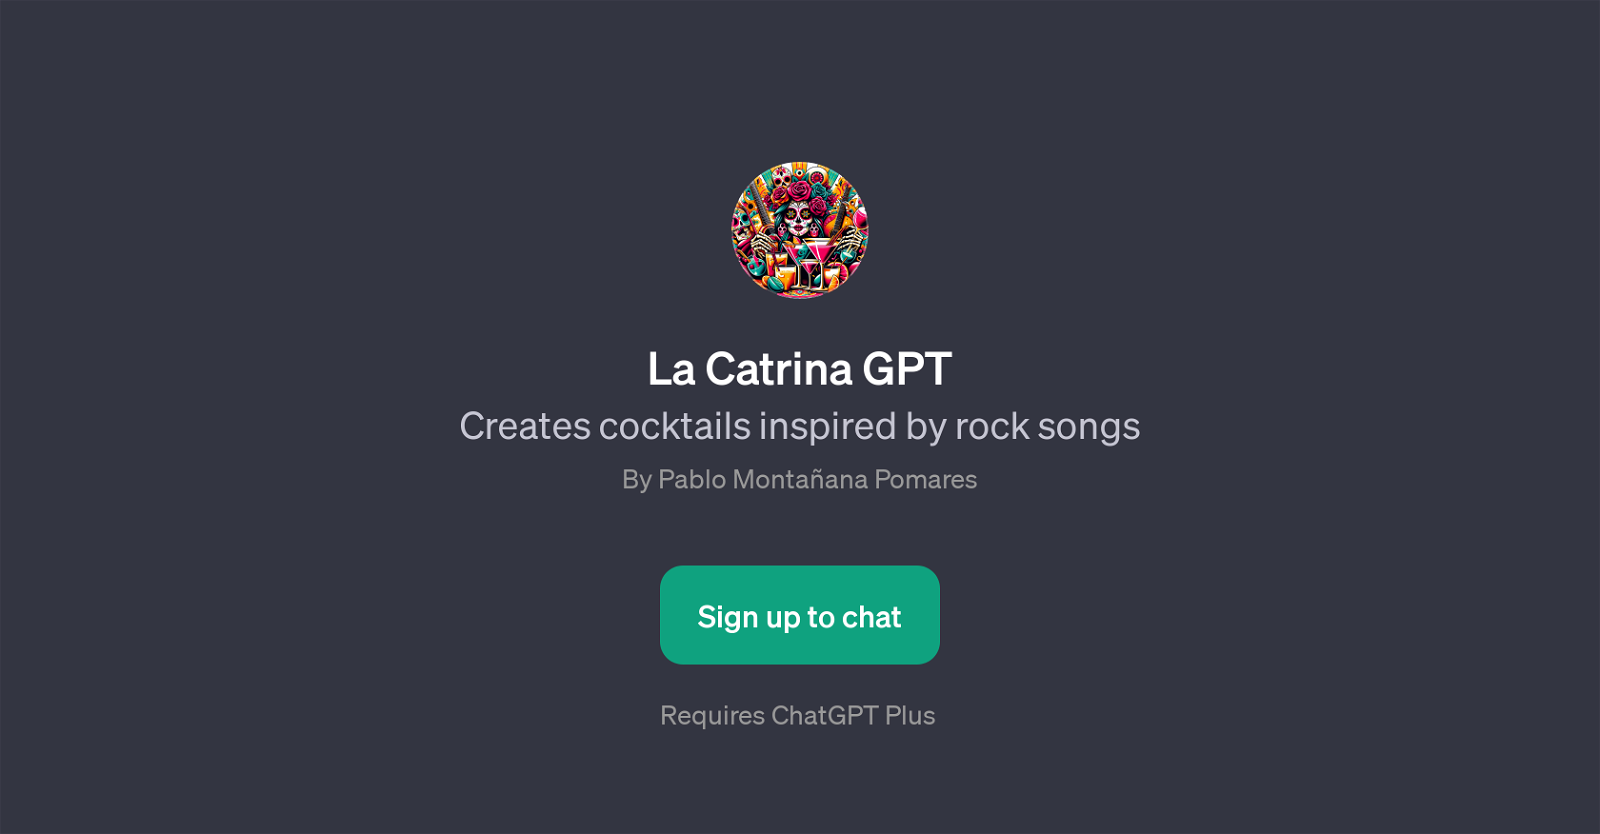 La Catrina GPT website